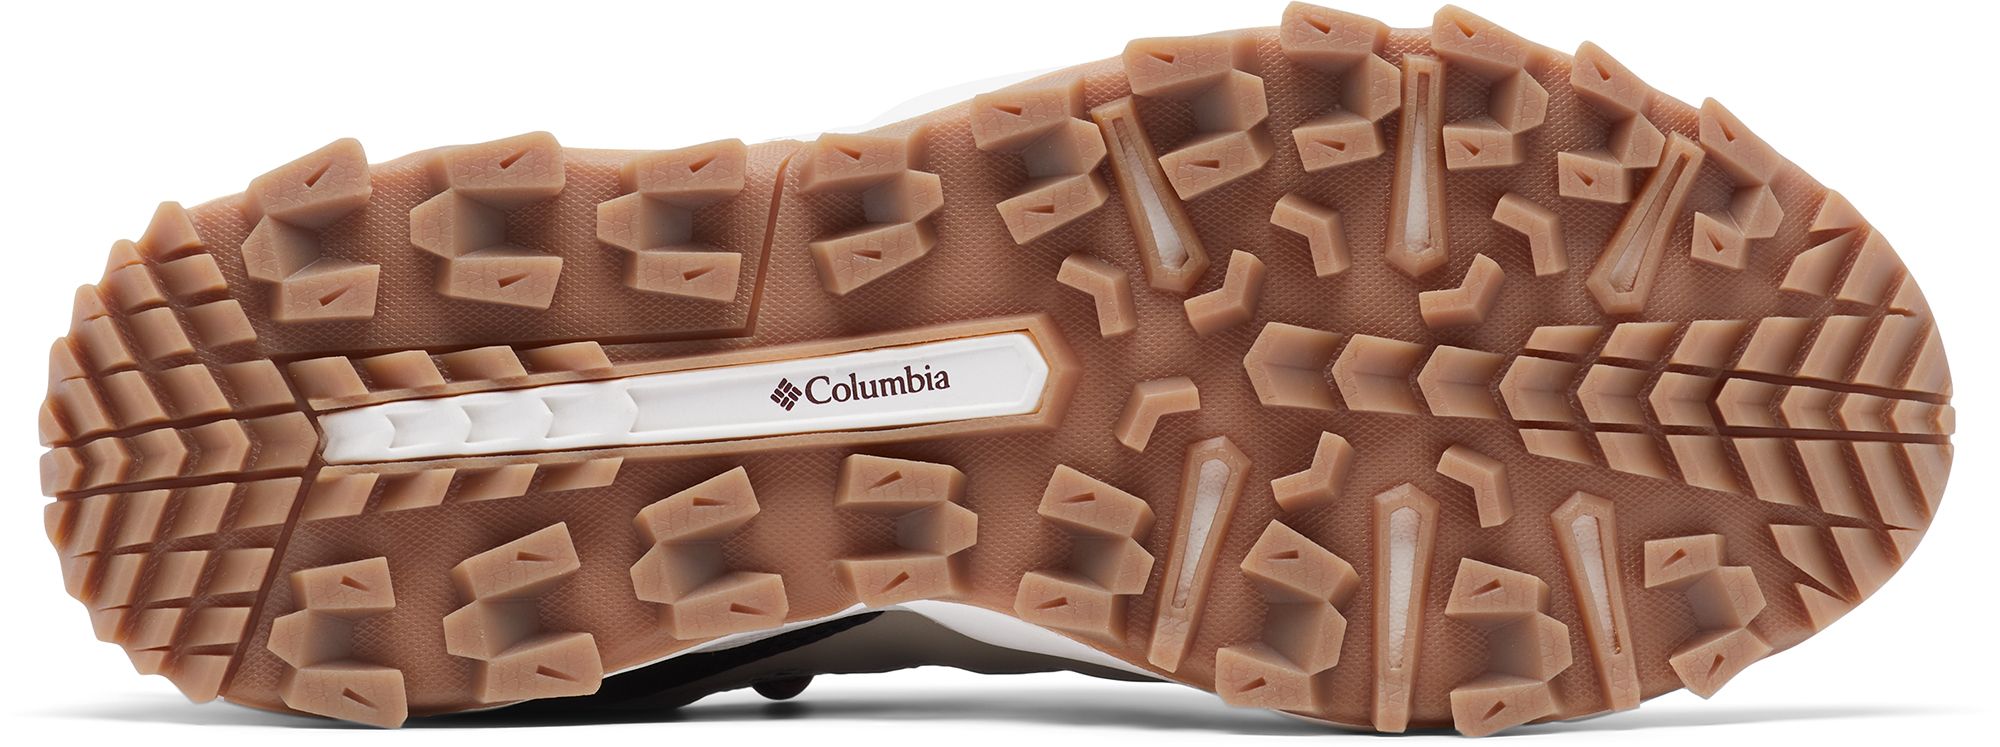 Columbia Men's Flow Fremont Hiking Shoes